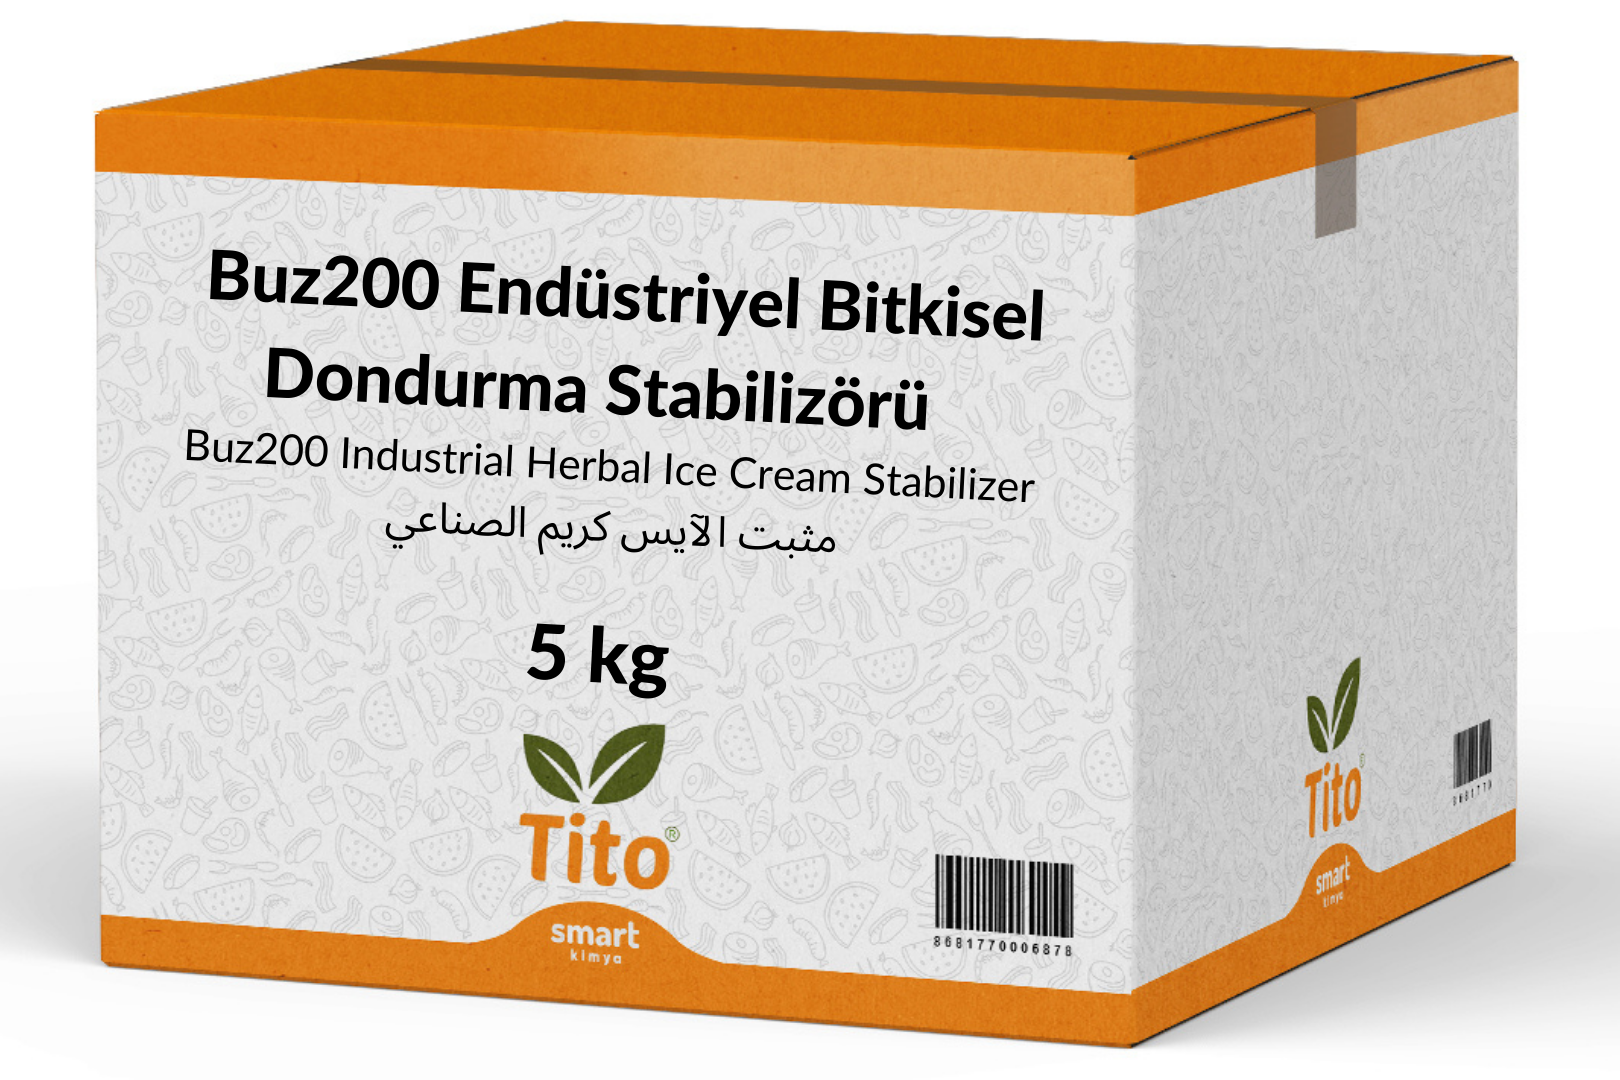 Buz200 Endüstriyel Bitkisel Dondurma Stabilizörü 5 kg